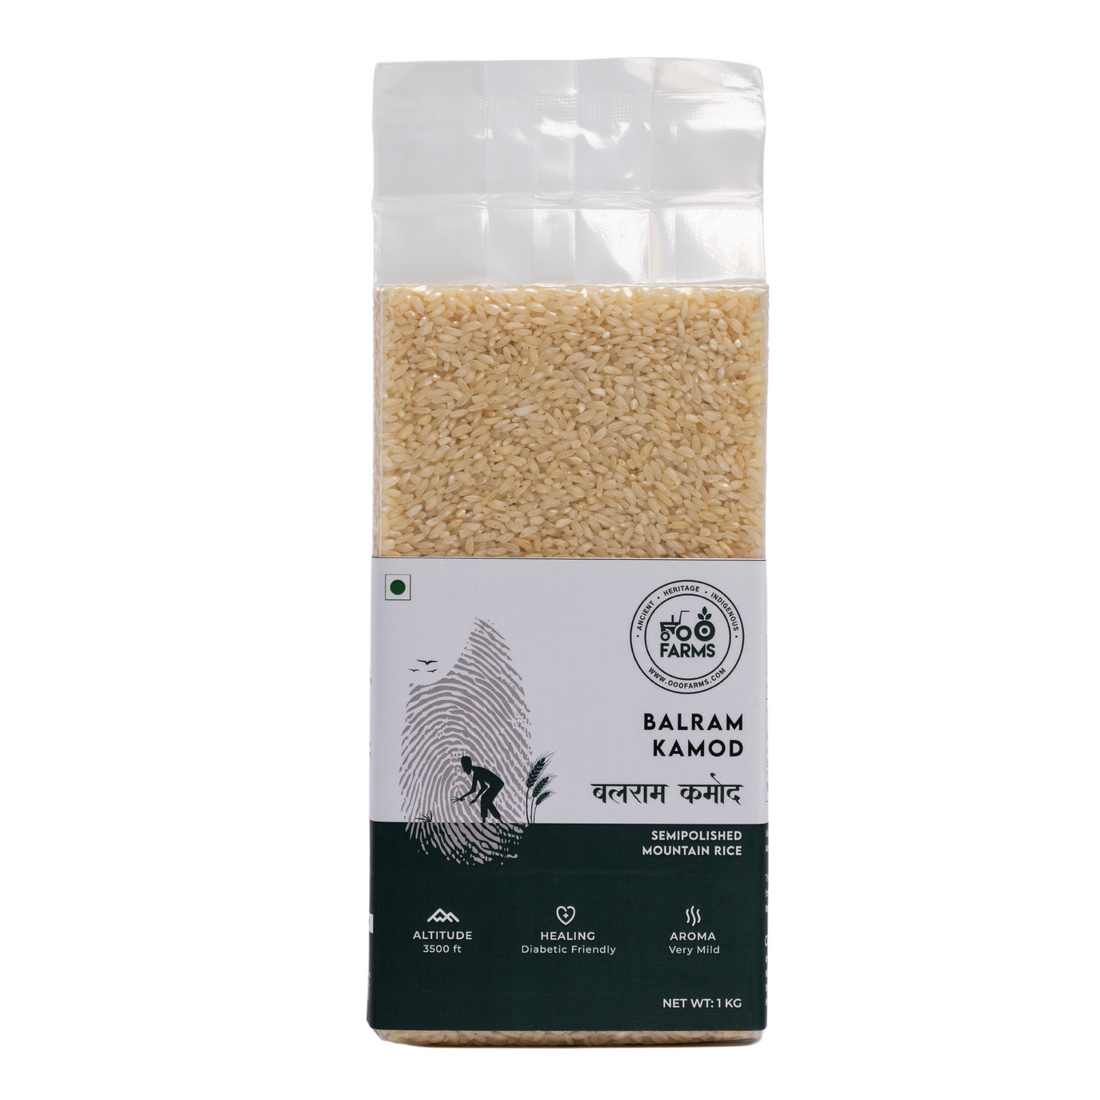 OOO Farms Balram Kamod Rice (Semipolished) Package Frontside